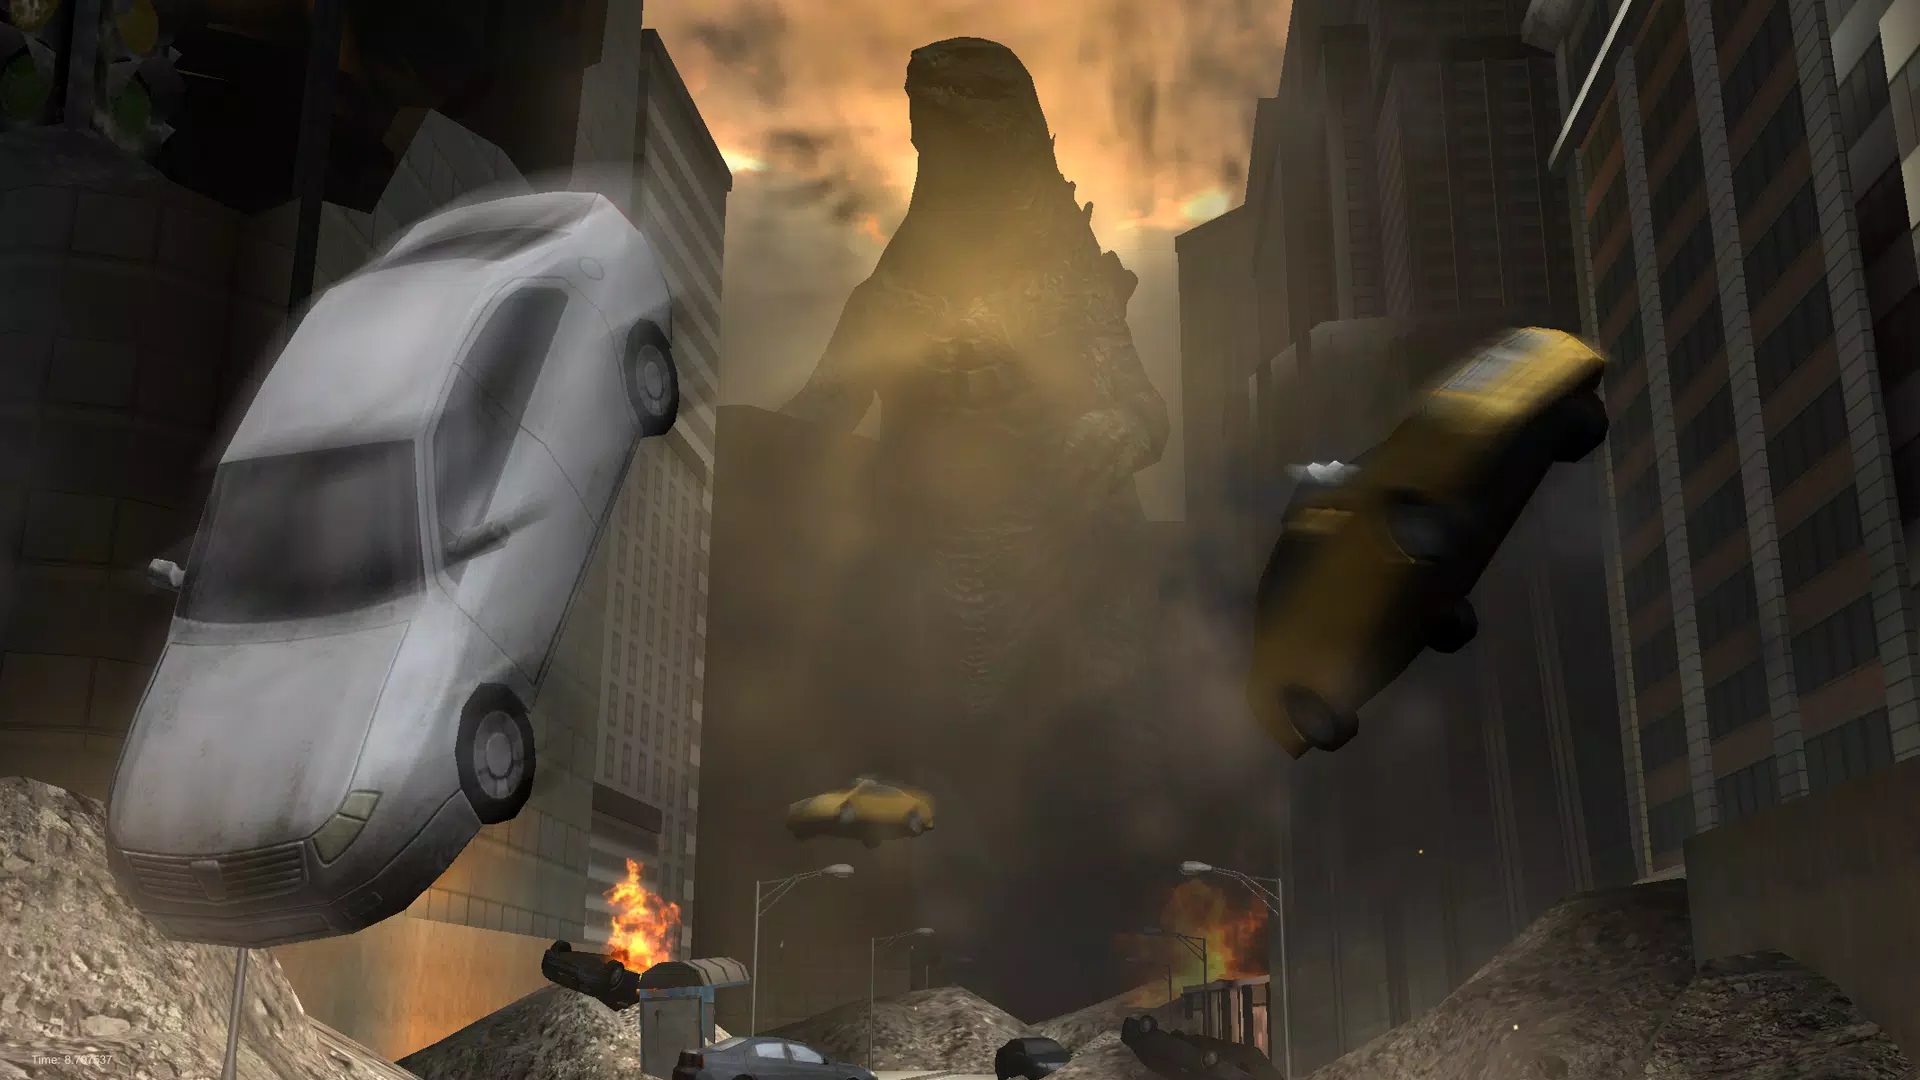 Link Download Game Godzilla Strike Zone Terbaru 2022